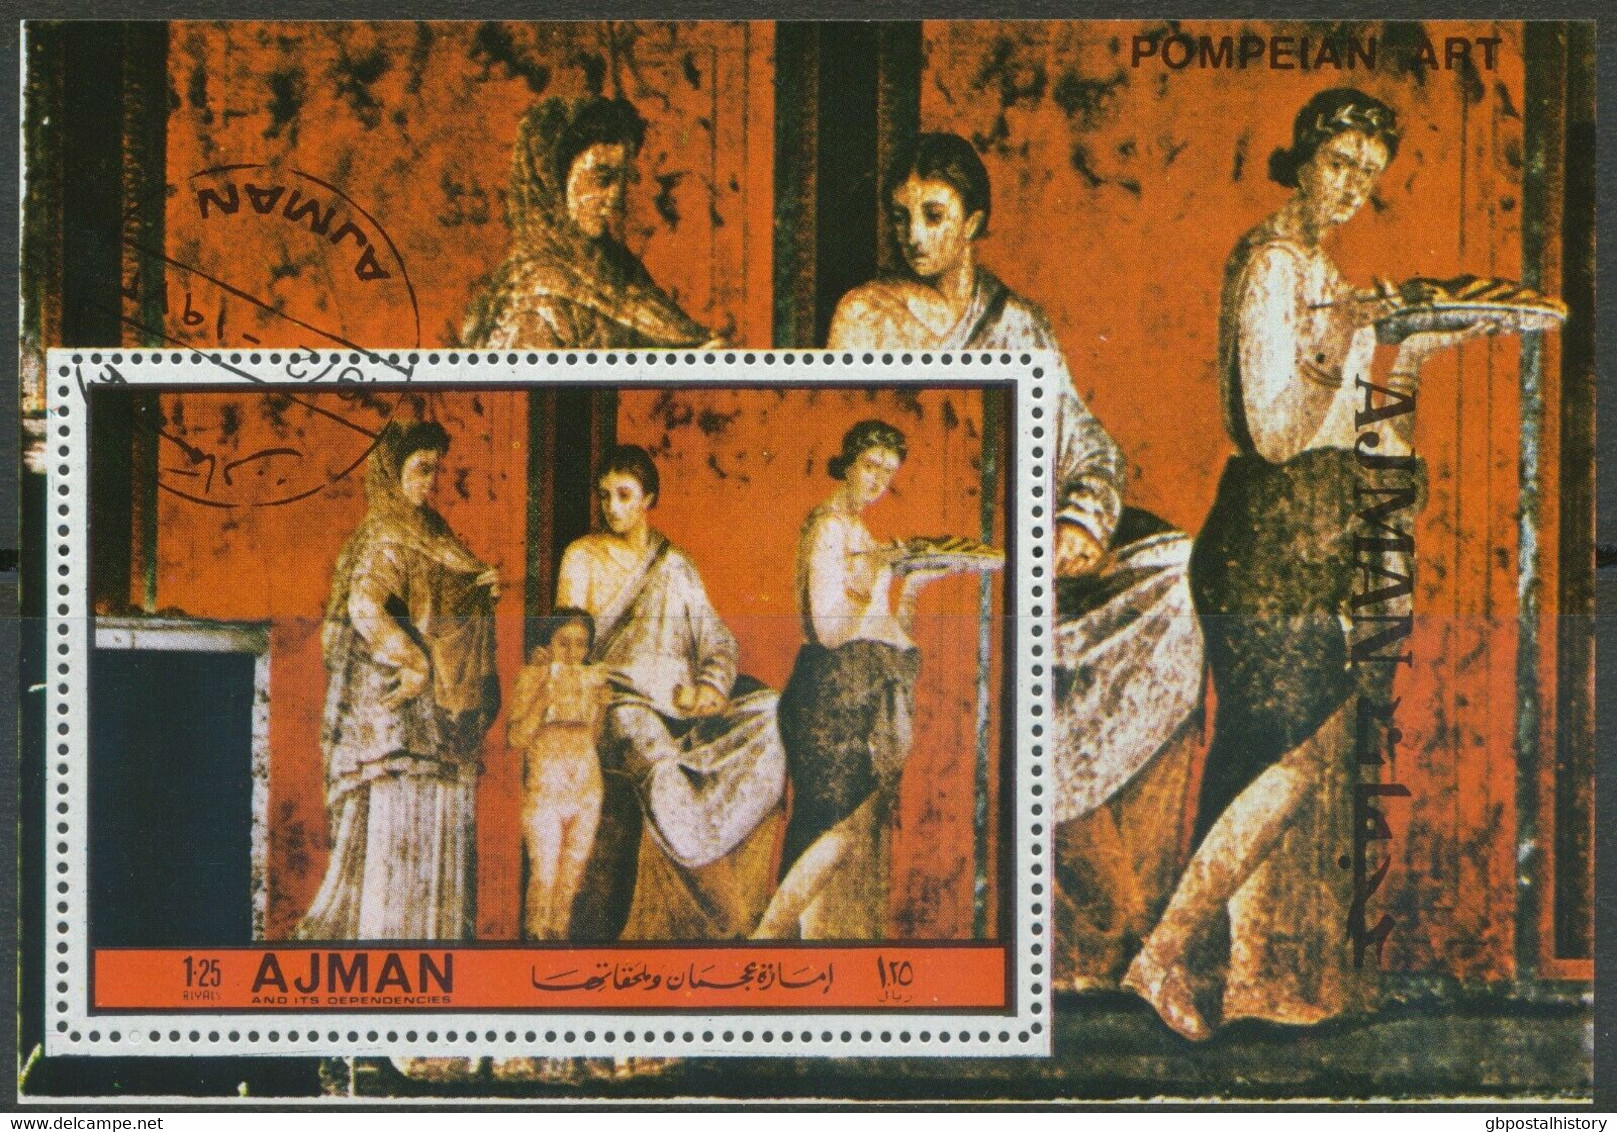 AJMAN 1972, Paintings Pompeian Art 1.25 R. Superb Used MS, MAJOR VARIETY: THICK CARDBOARD-LIKE PAPER - Ajman